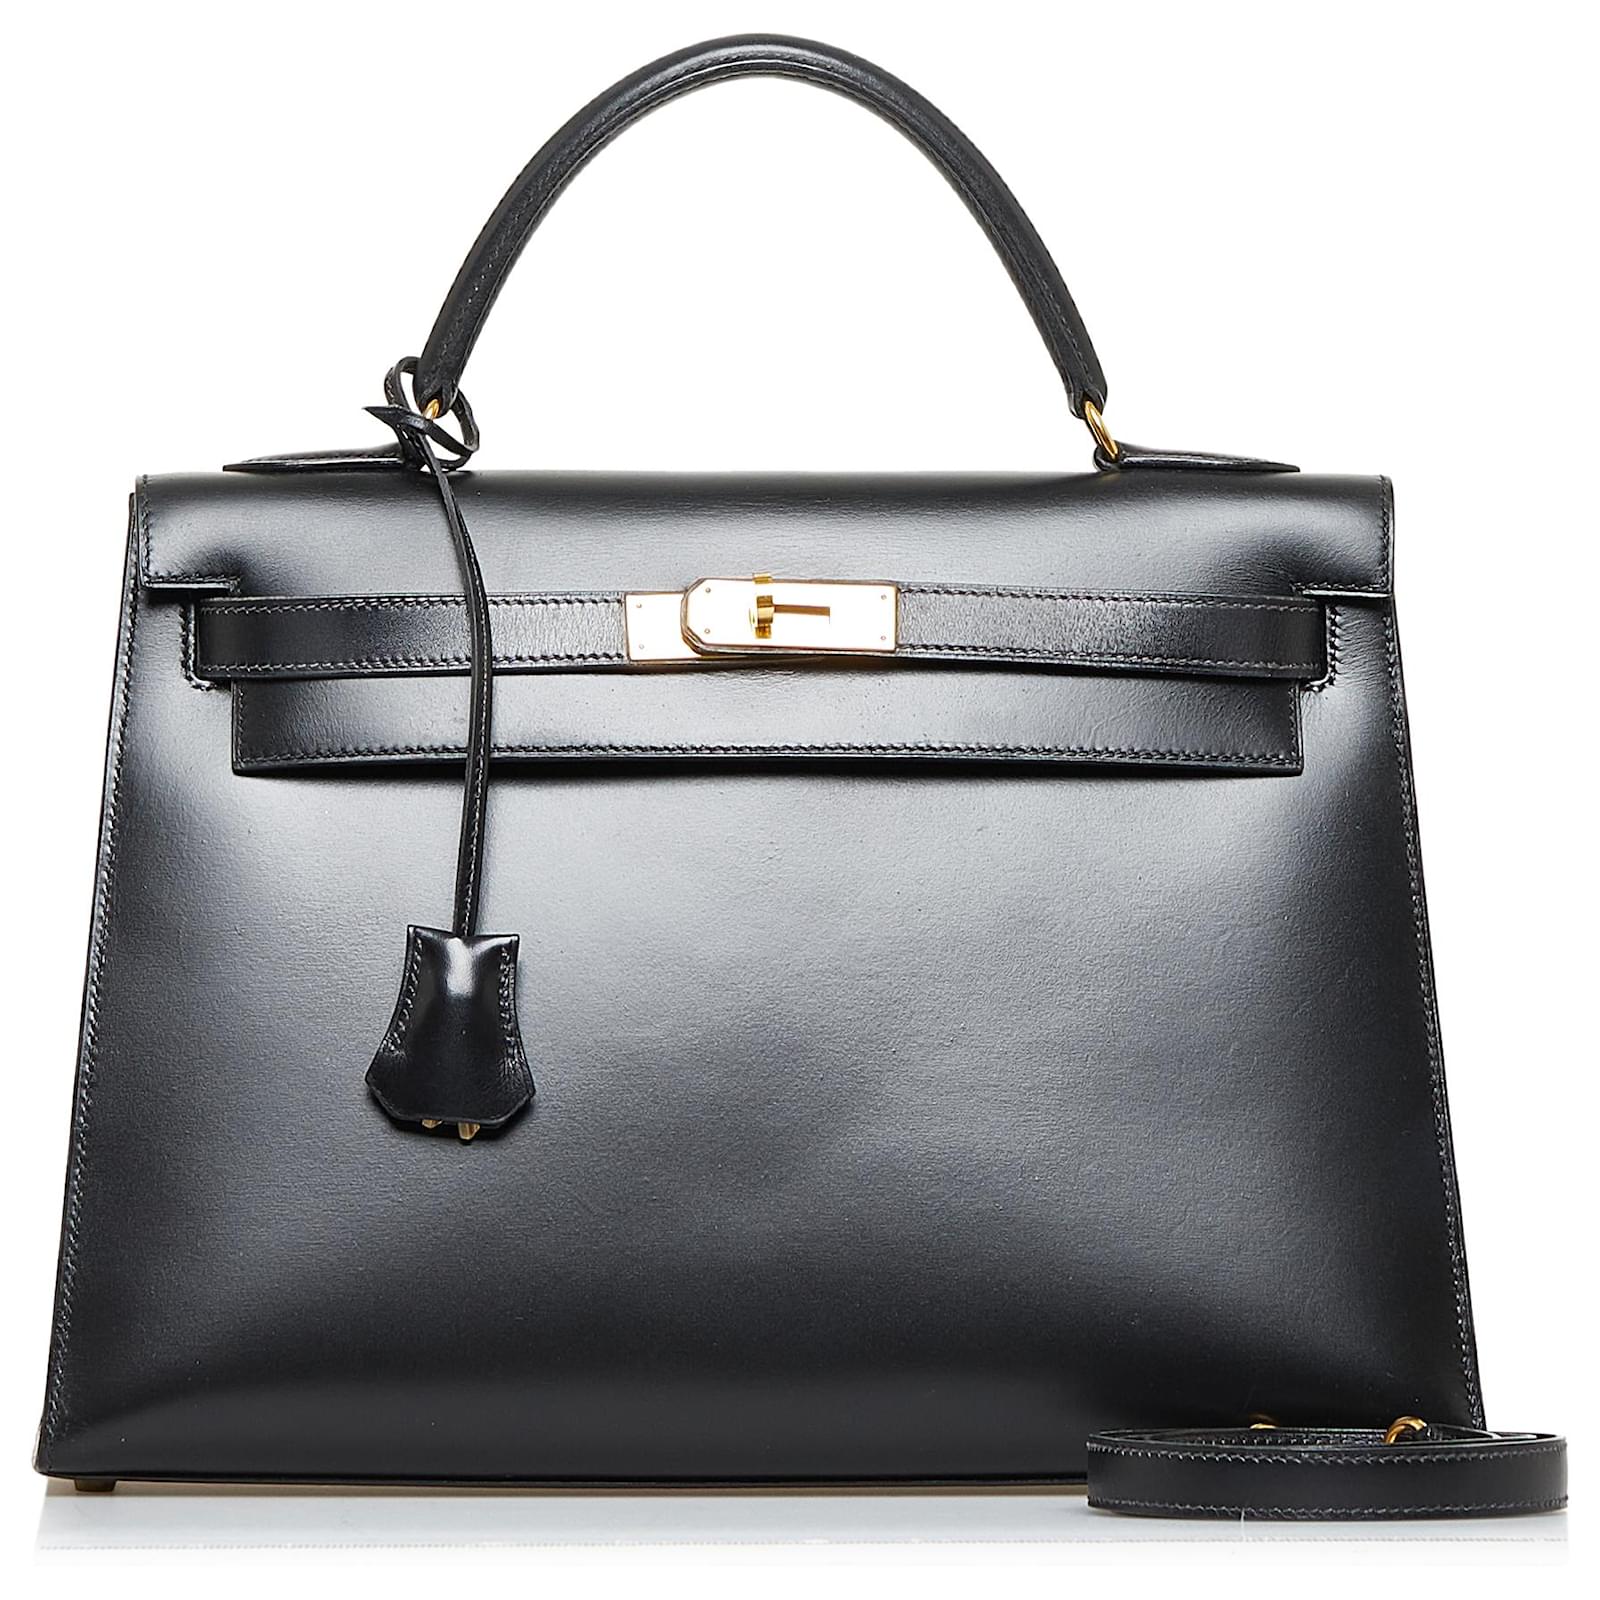 Hermes Kelly 32cm So Black Box Leather